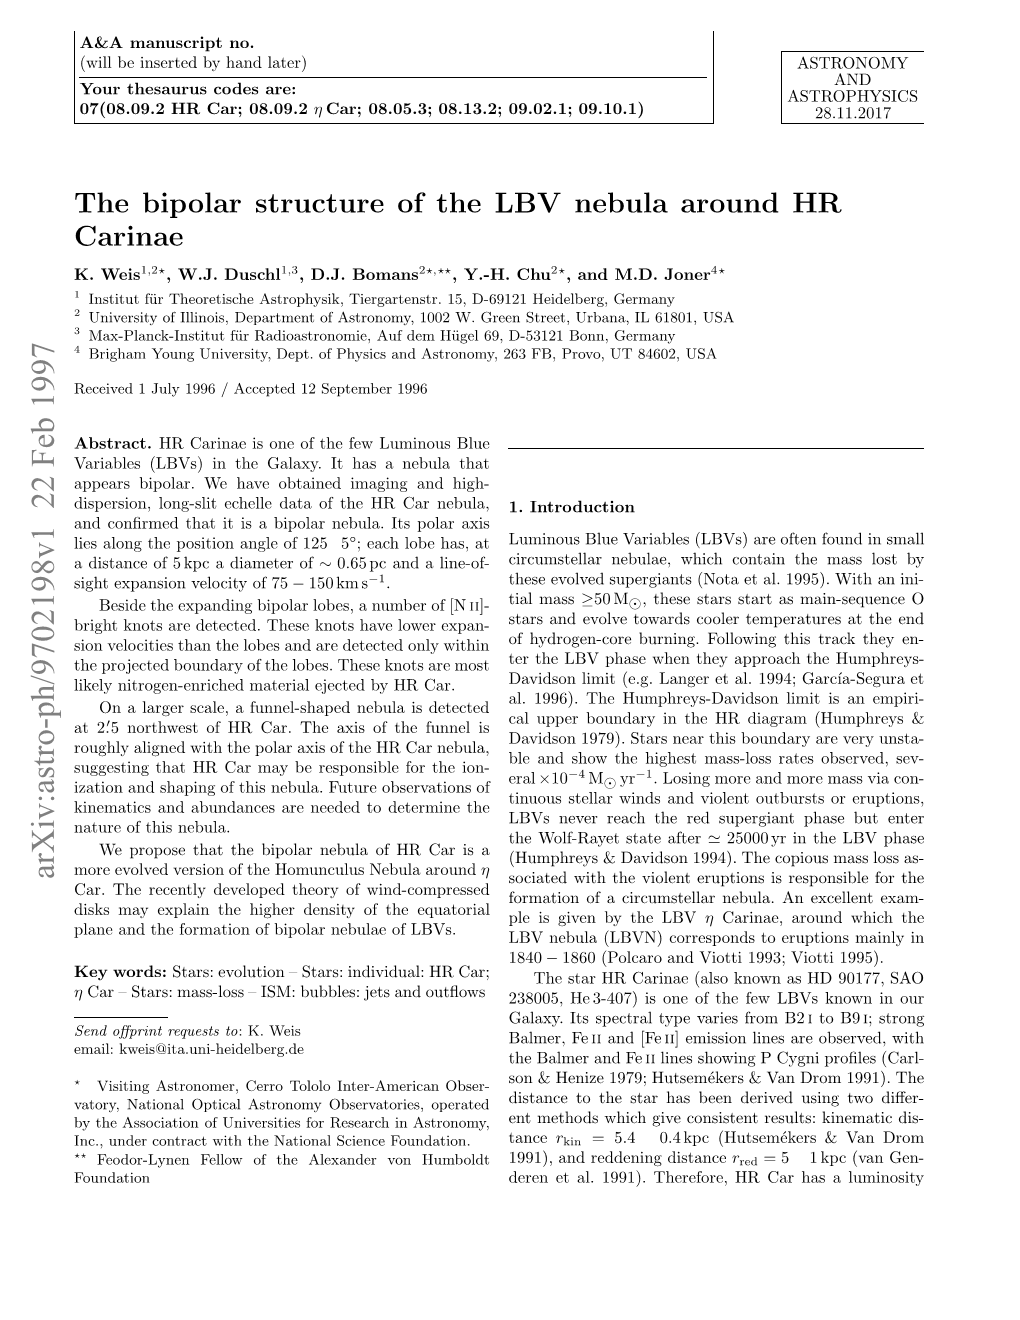 The Bipolar Structure of the LBV Nebula Around HR Carinae